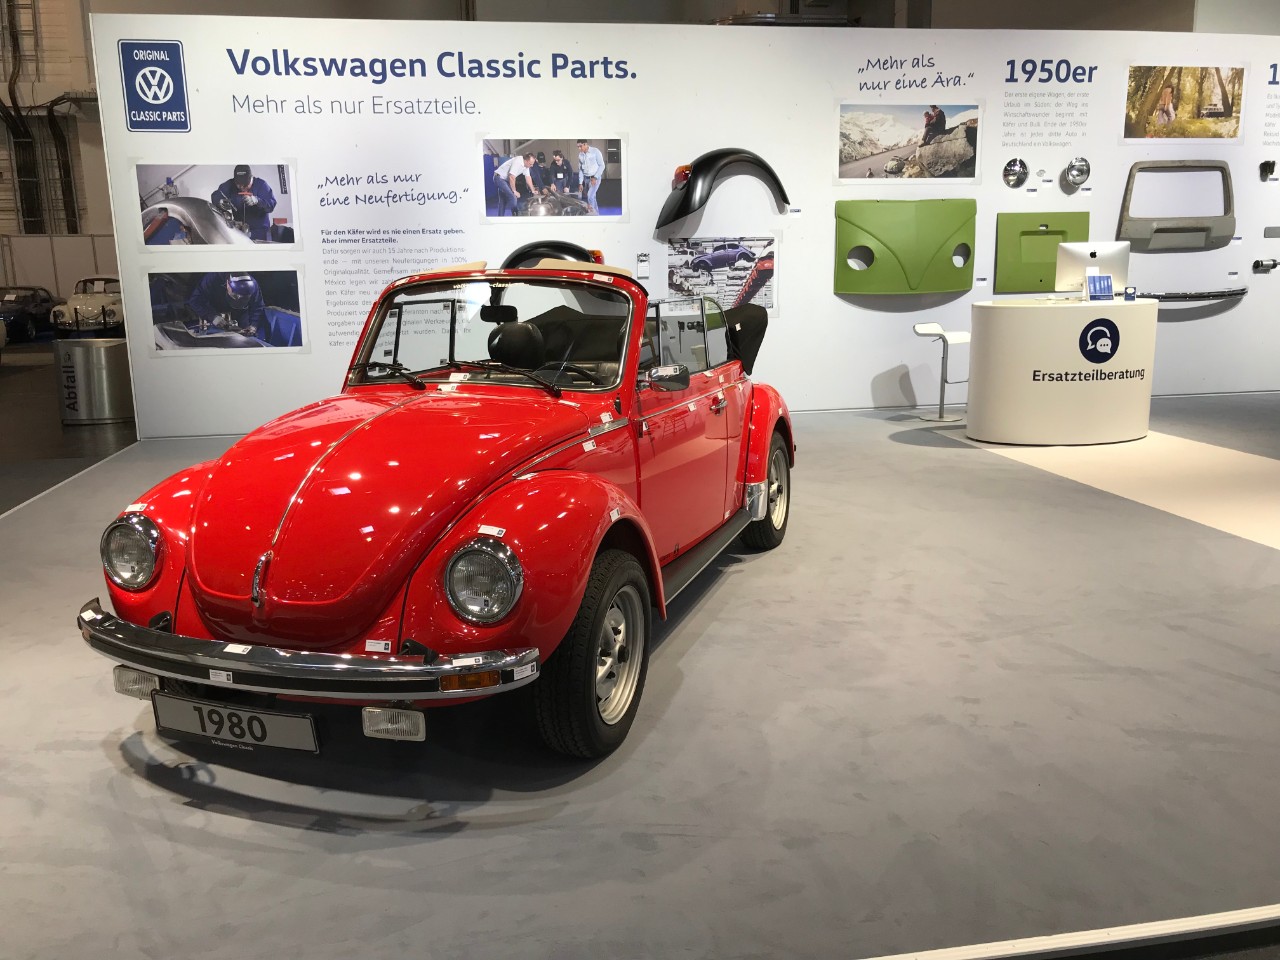 Volkswagen Classic Parts - Techno Classica Essen 2019